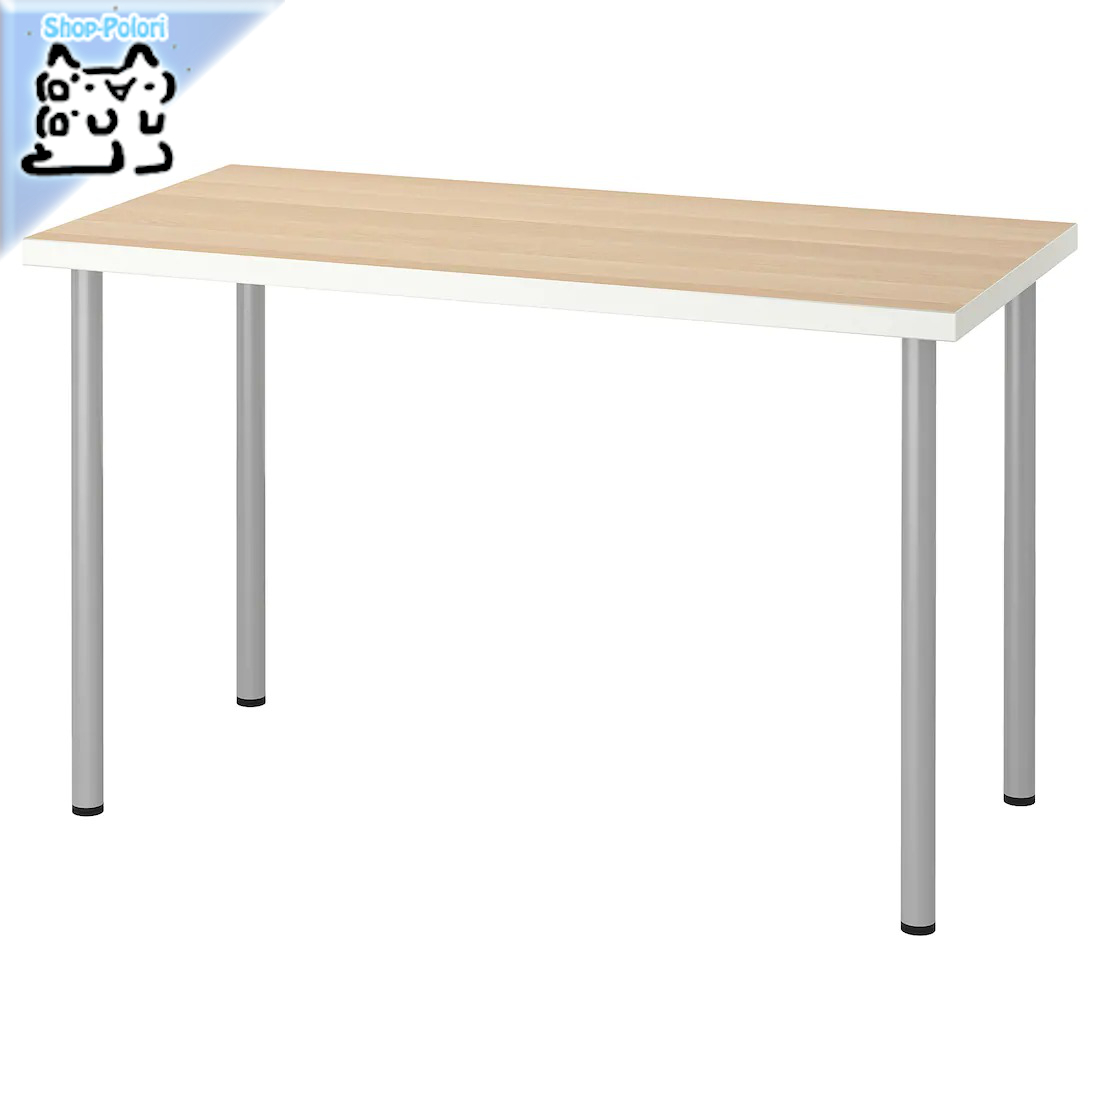 【IKEA Original】LINNMON -リンモン- テーブル ホワイト ホワイトステインオーク調 シルバーカラー 120x60 cm画像